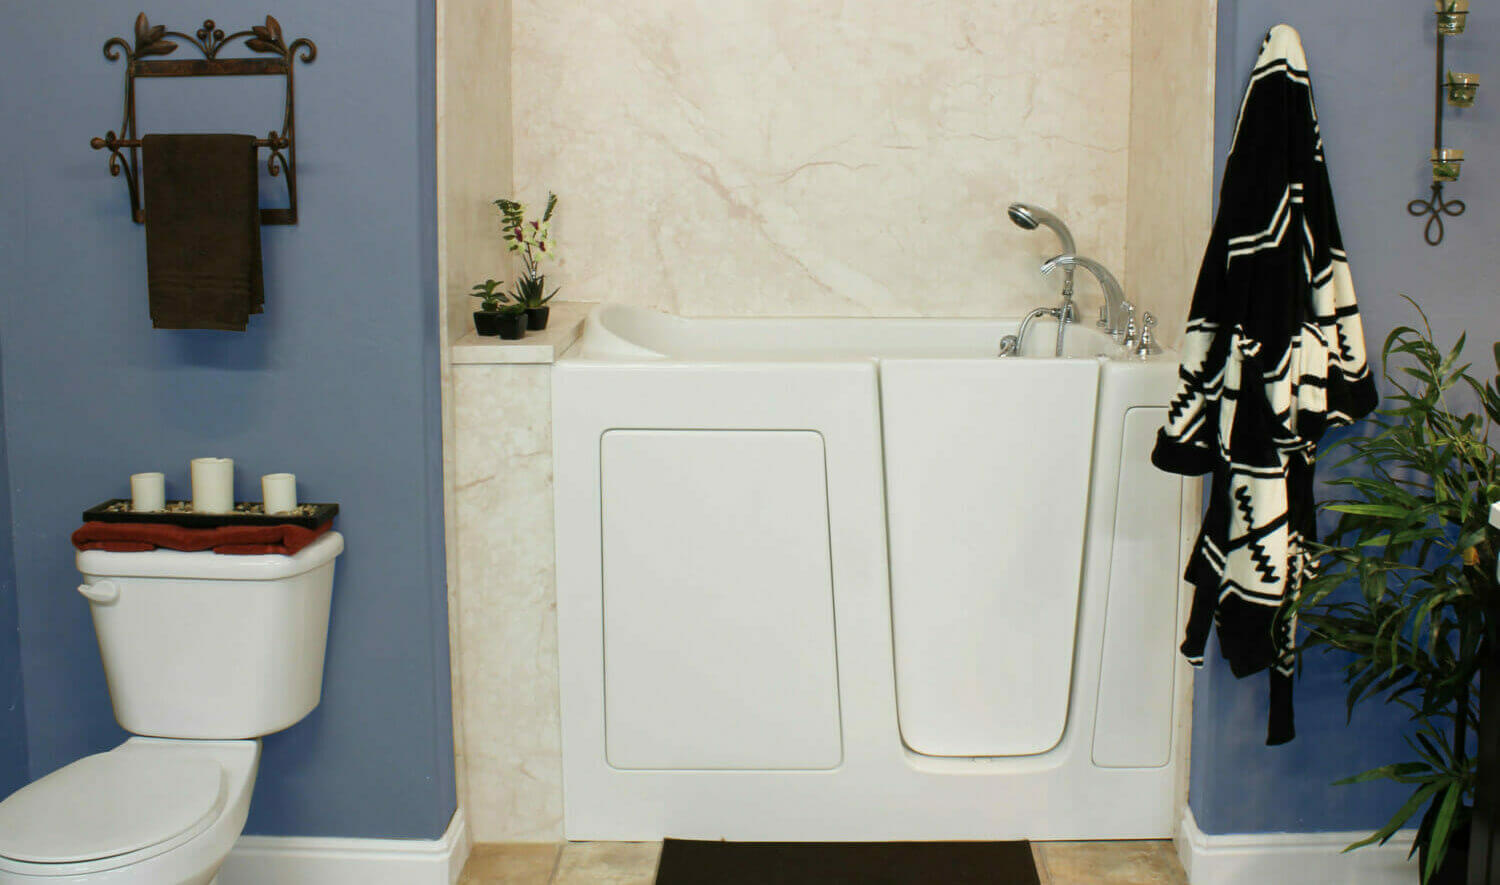 Five Star Bath Solutions Of Oklahoma City Walk-in Bathtub Installation